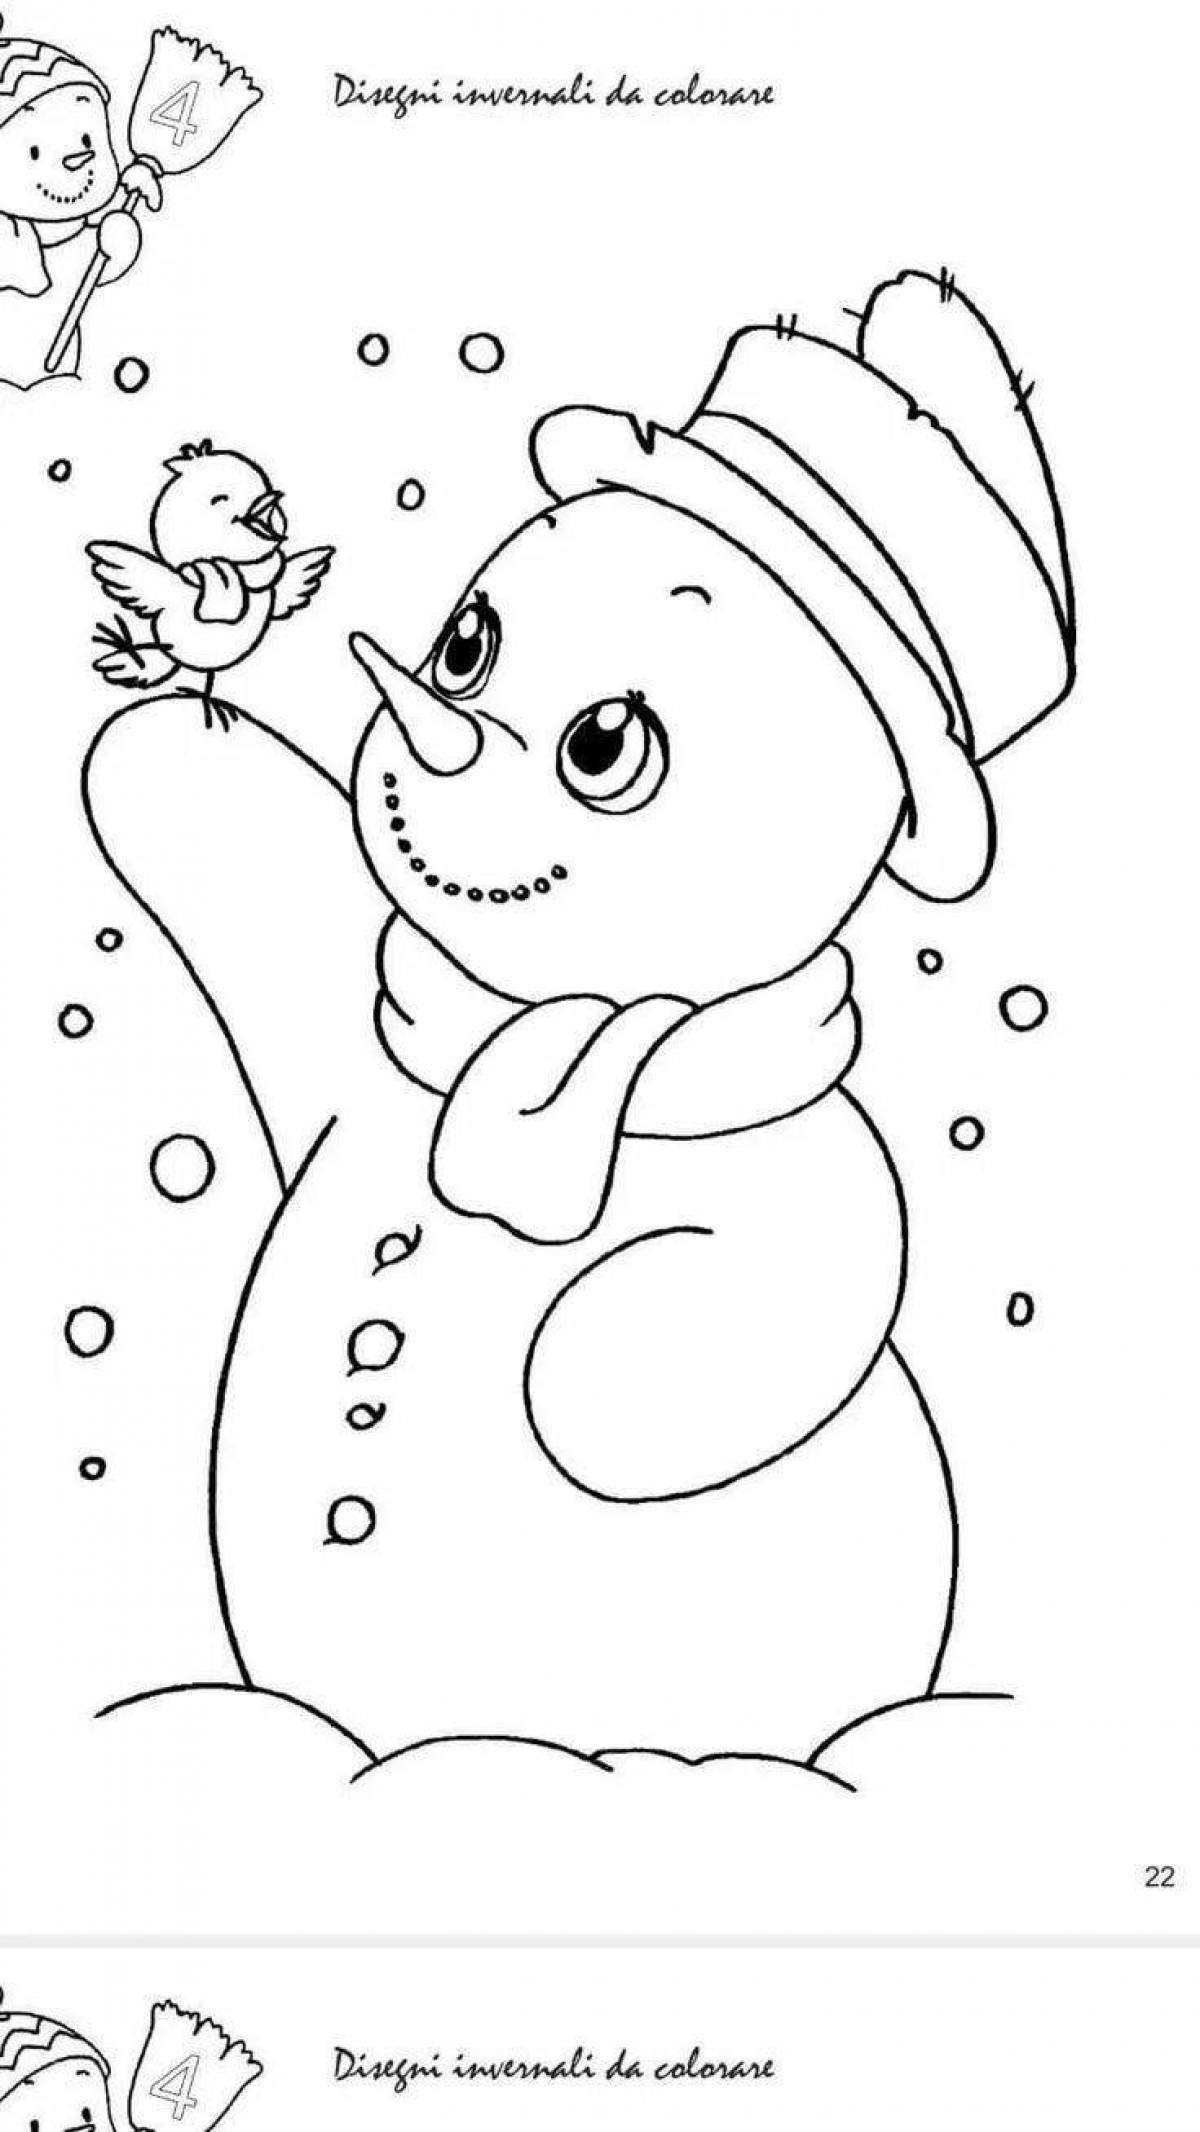 Dazzling coloring cute snowman